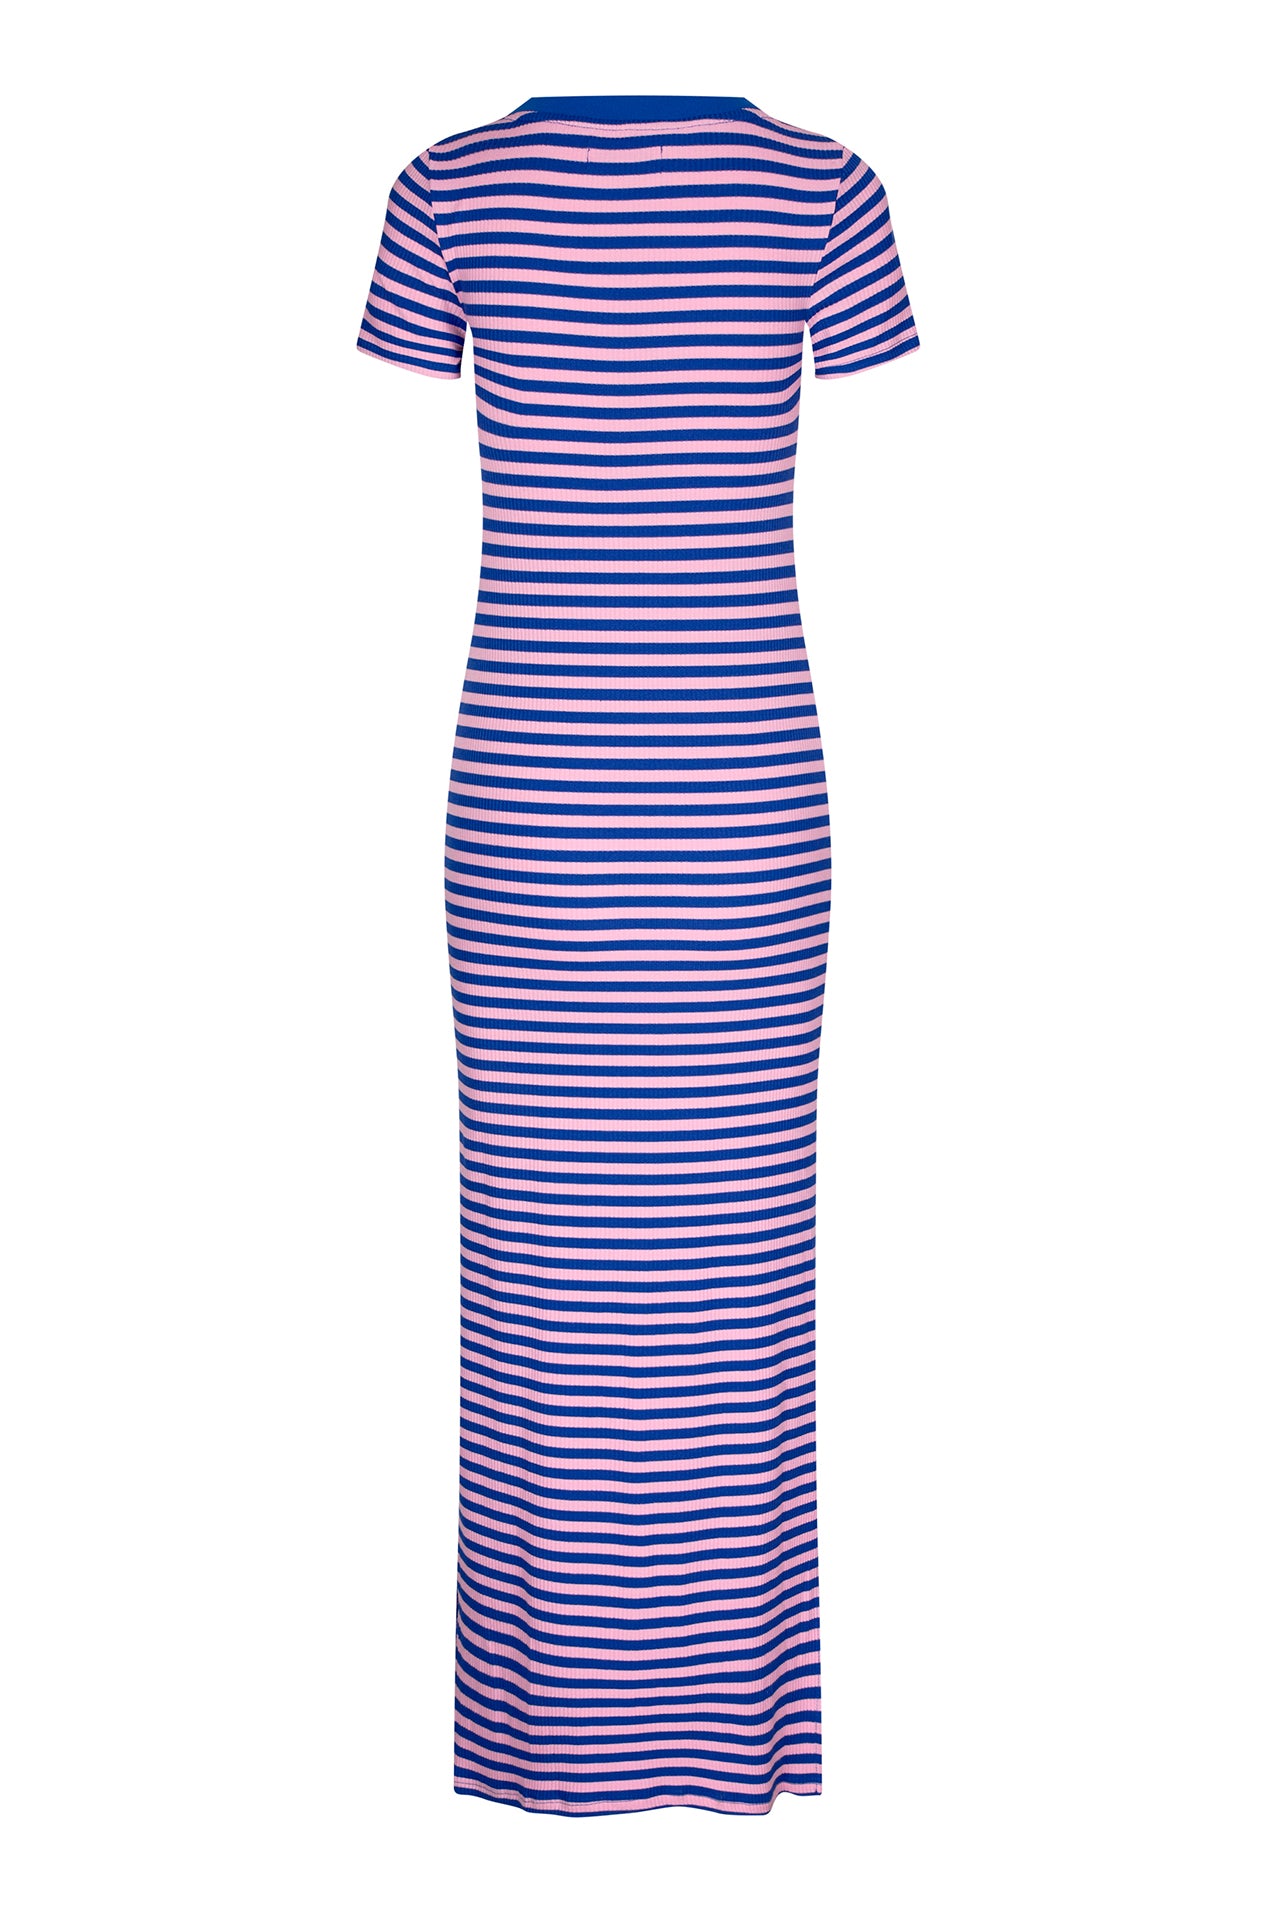 Lollys Laundry ChristineLL Maxi Dress SL Dress 52 Lavender